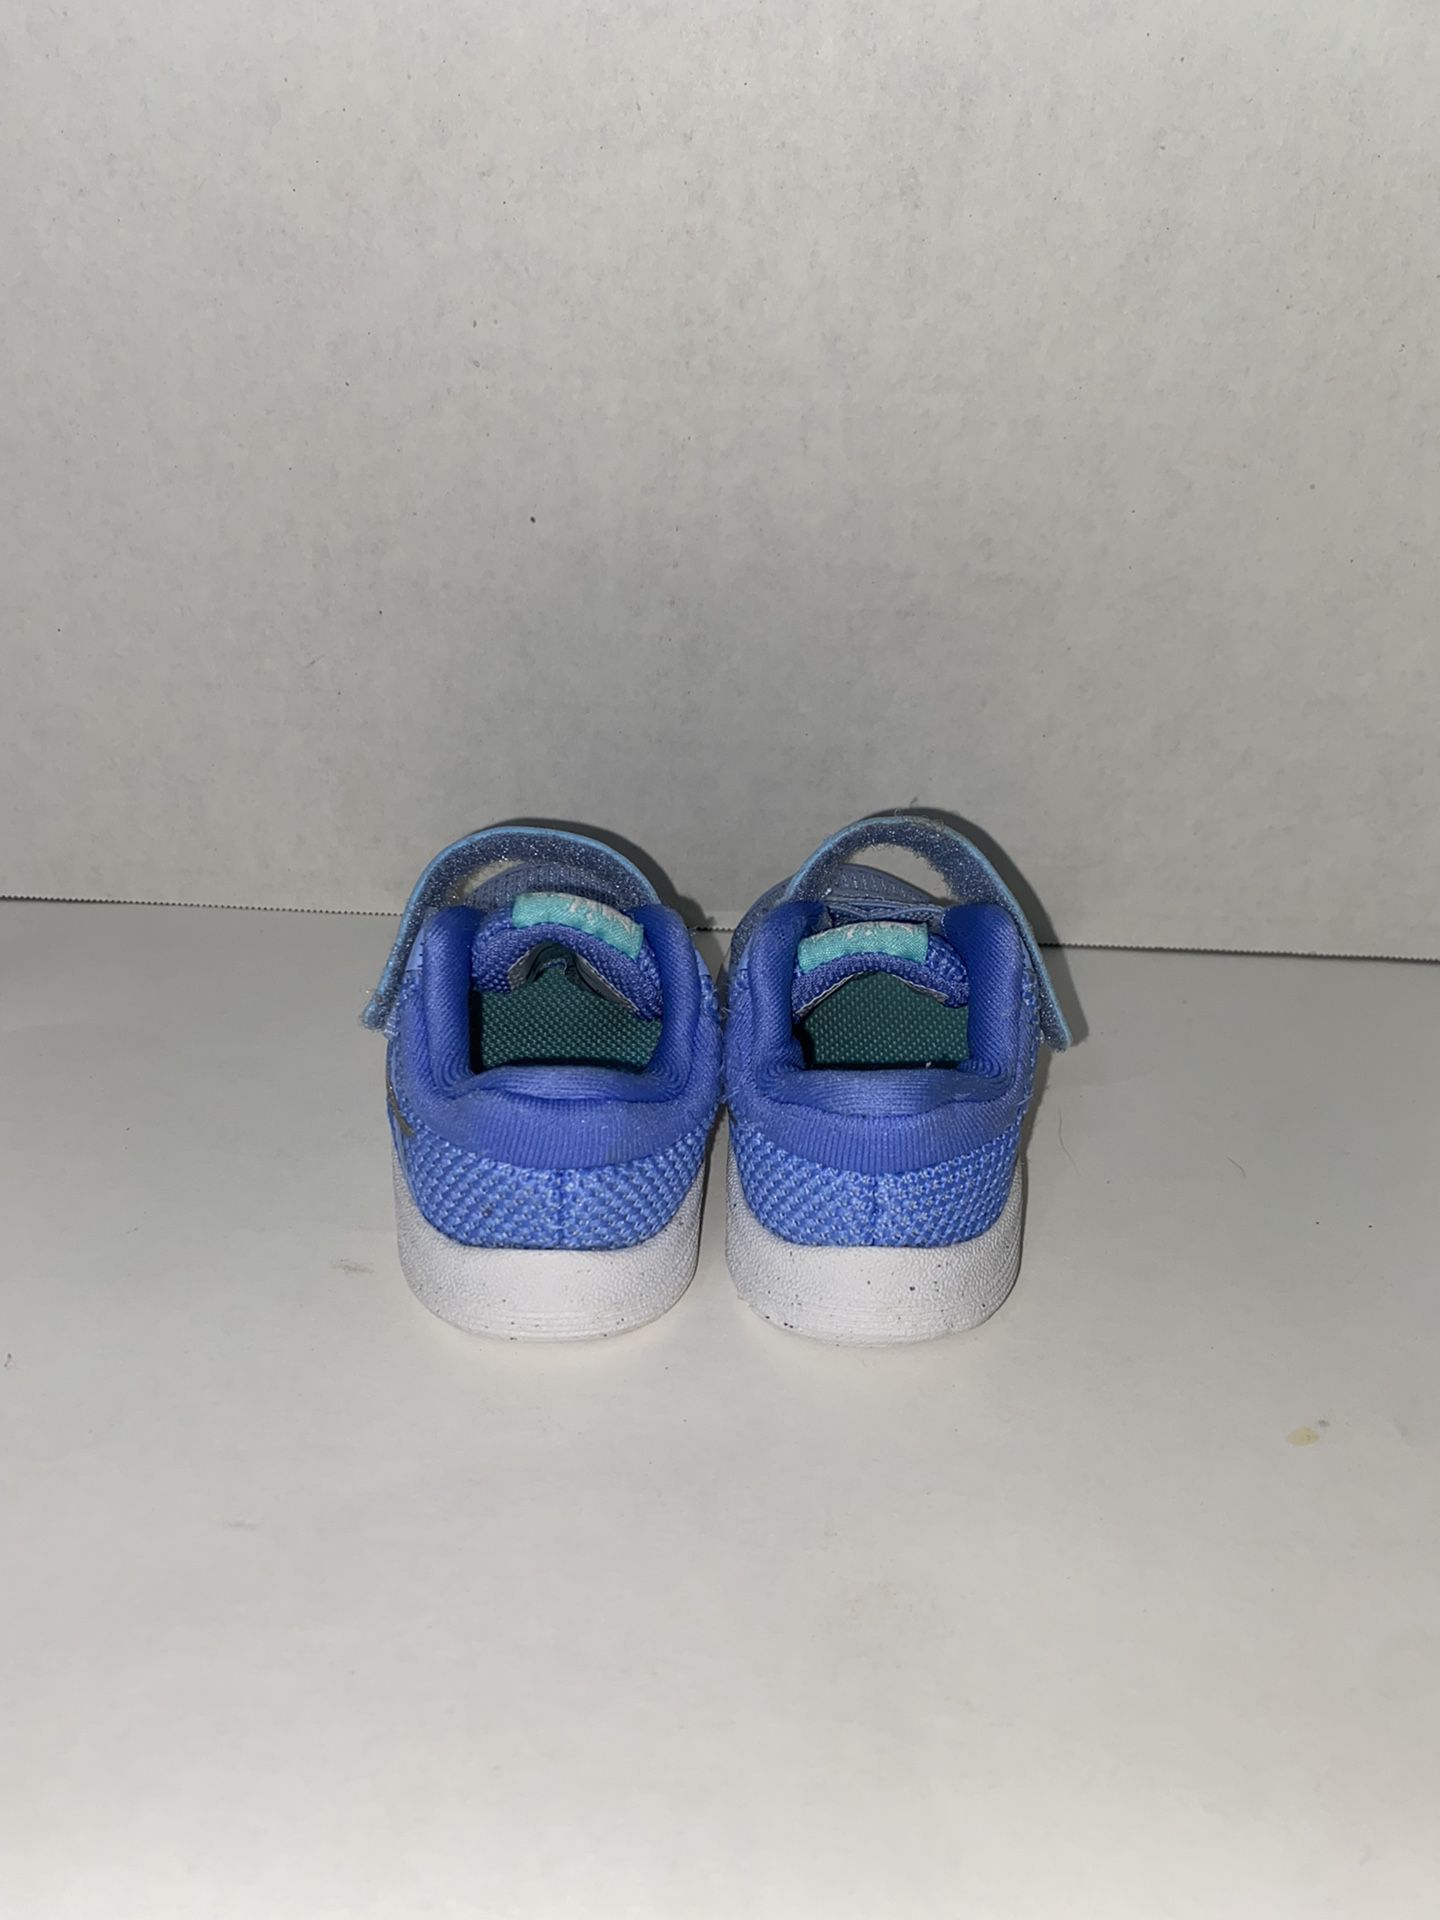 Blue Nike Shoes 